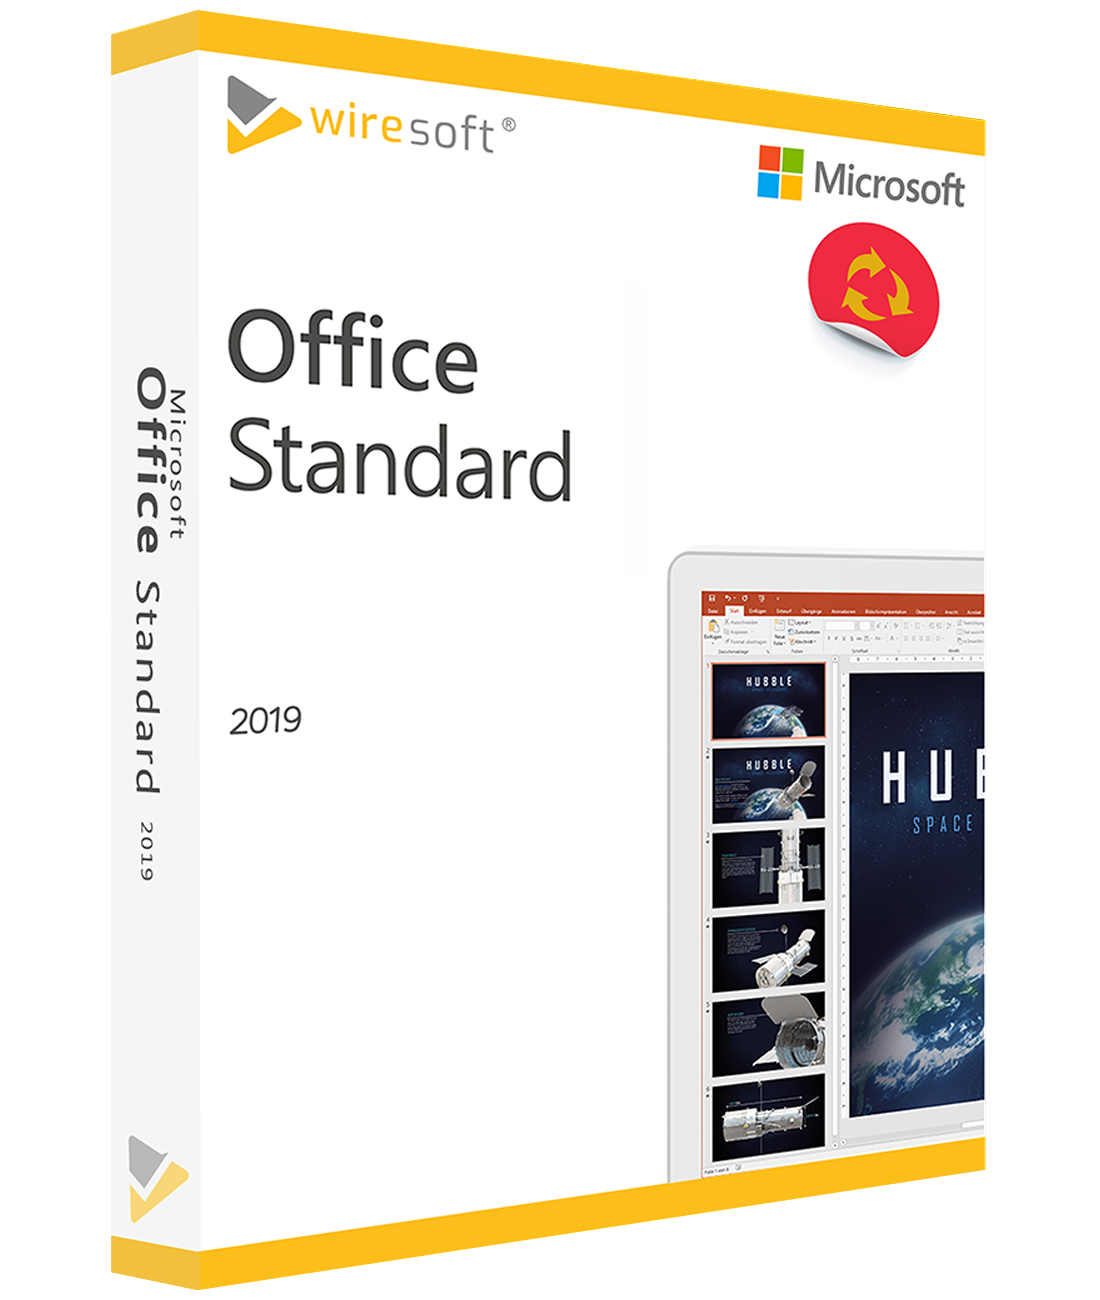 Office 2019 Microsoft Office For Windows Office Tarkvarapood Wiresoft Osta Litsentse Internetis 2571